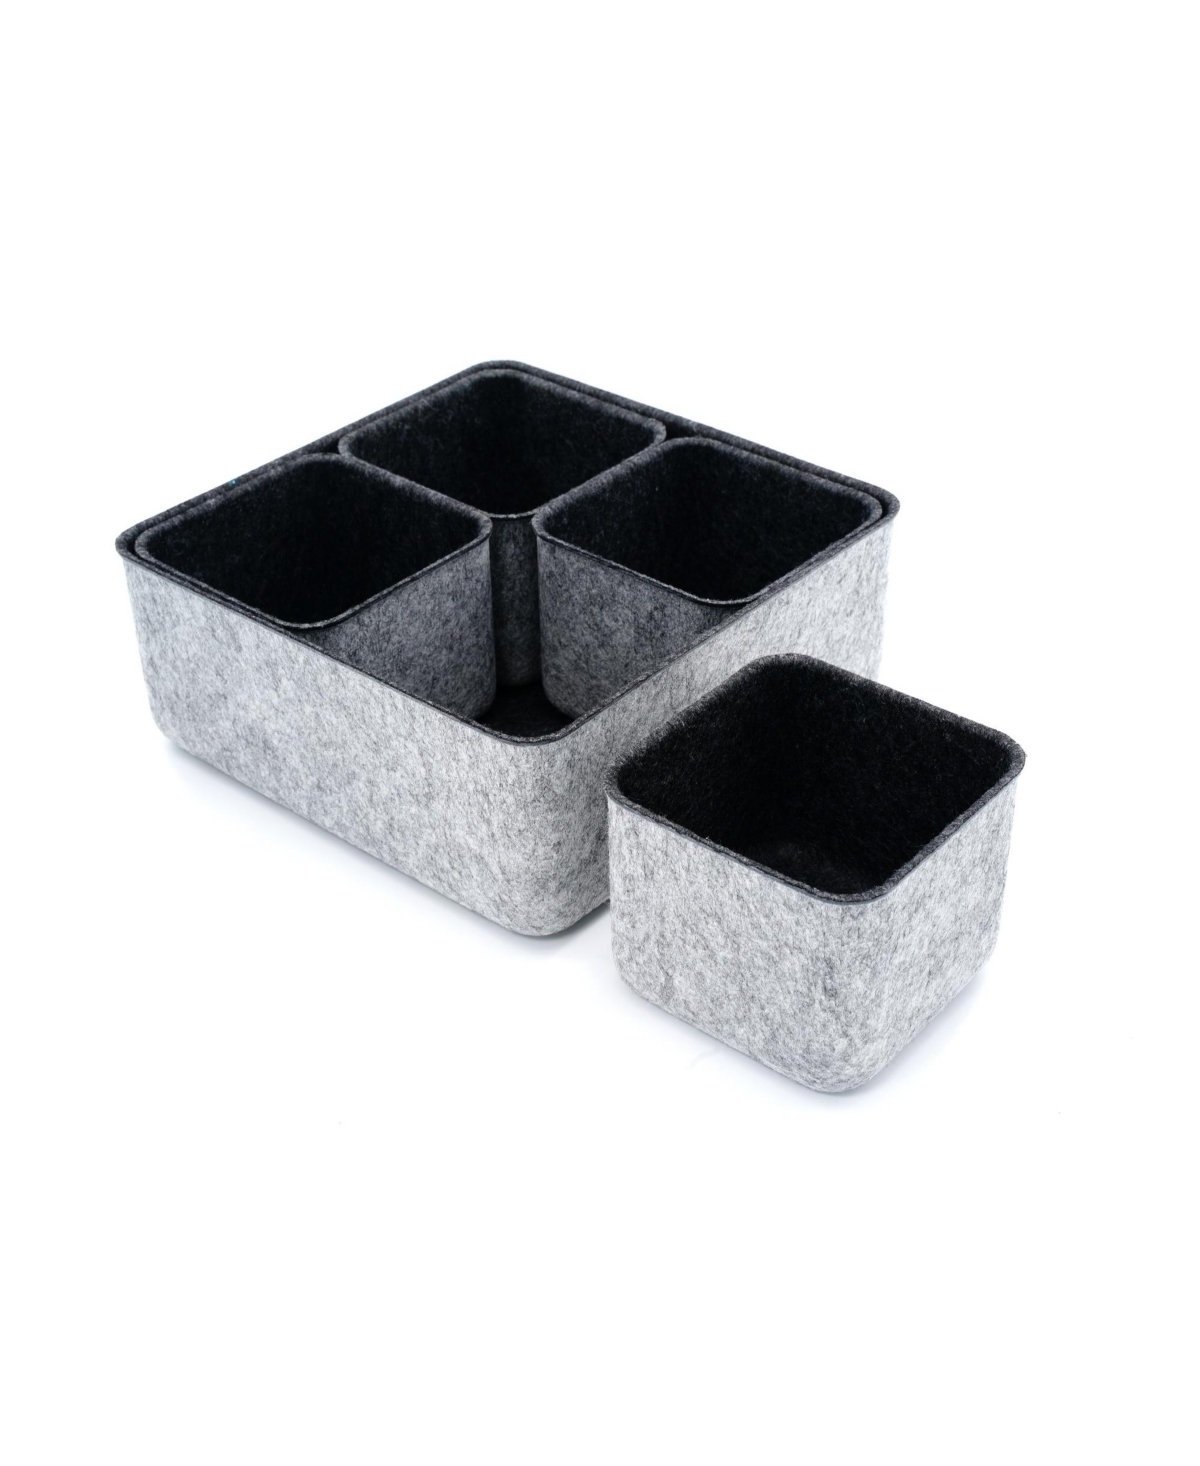 5 Piece Square Felt Storage Bin Set - Charcoal